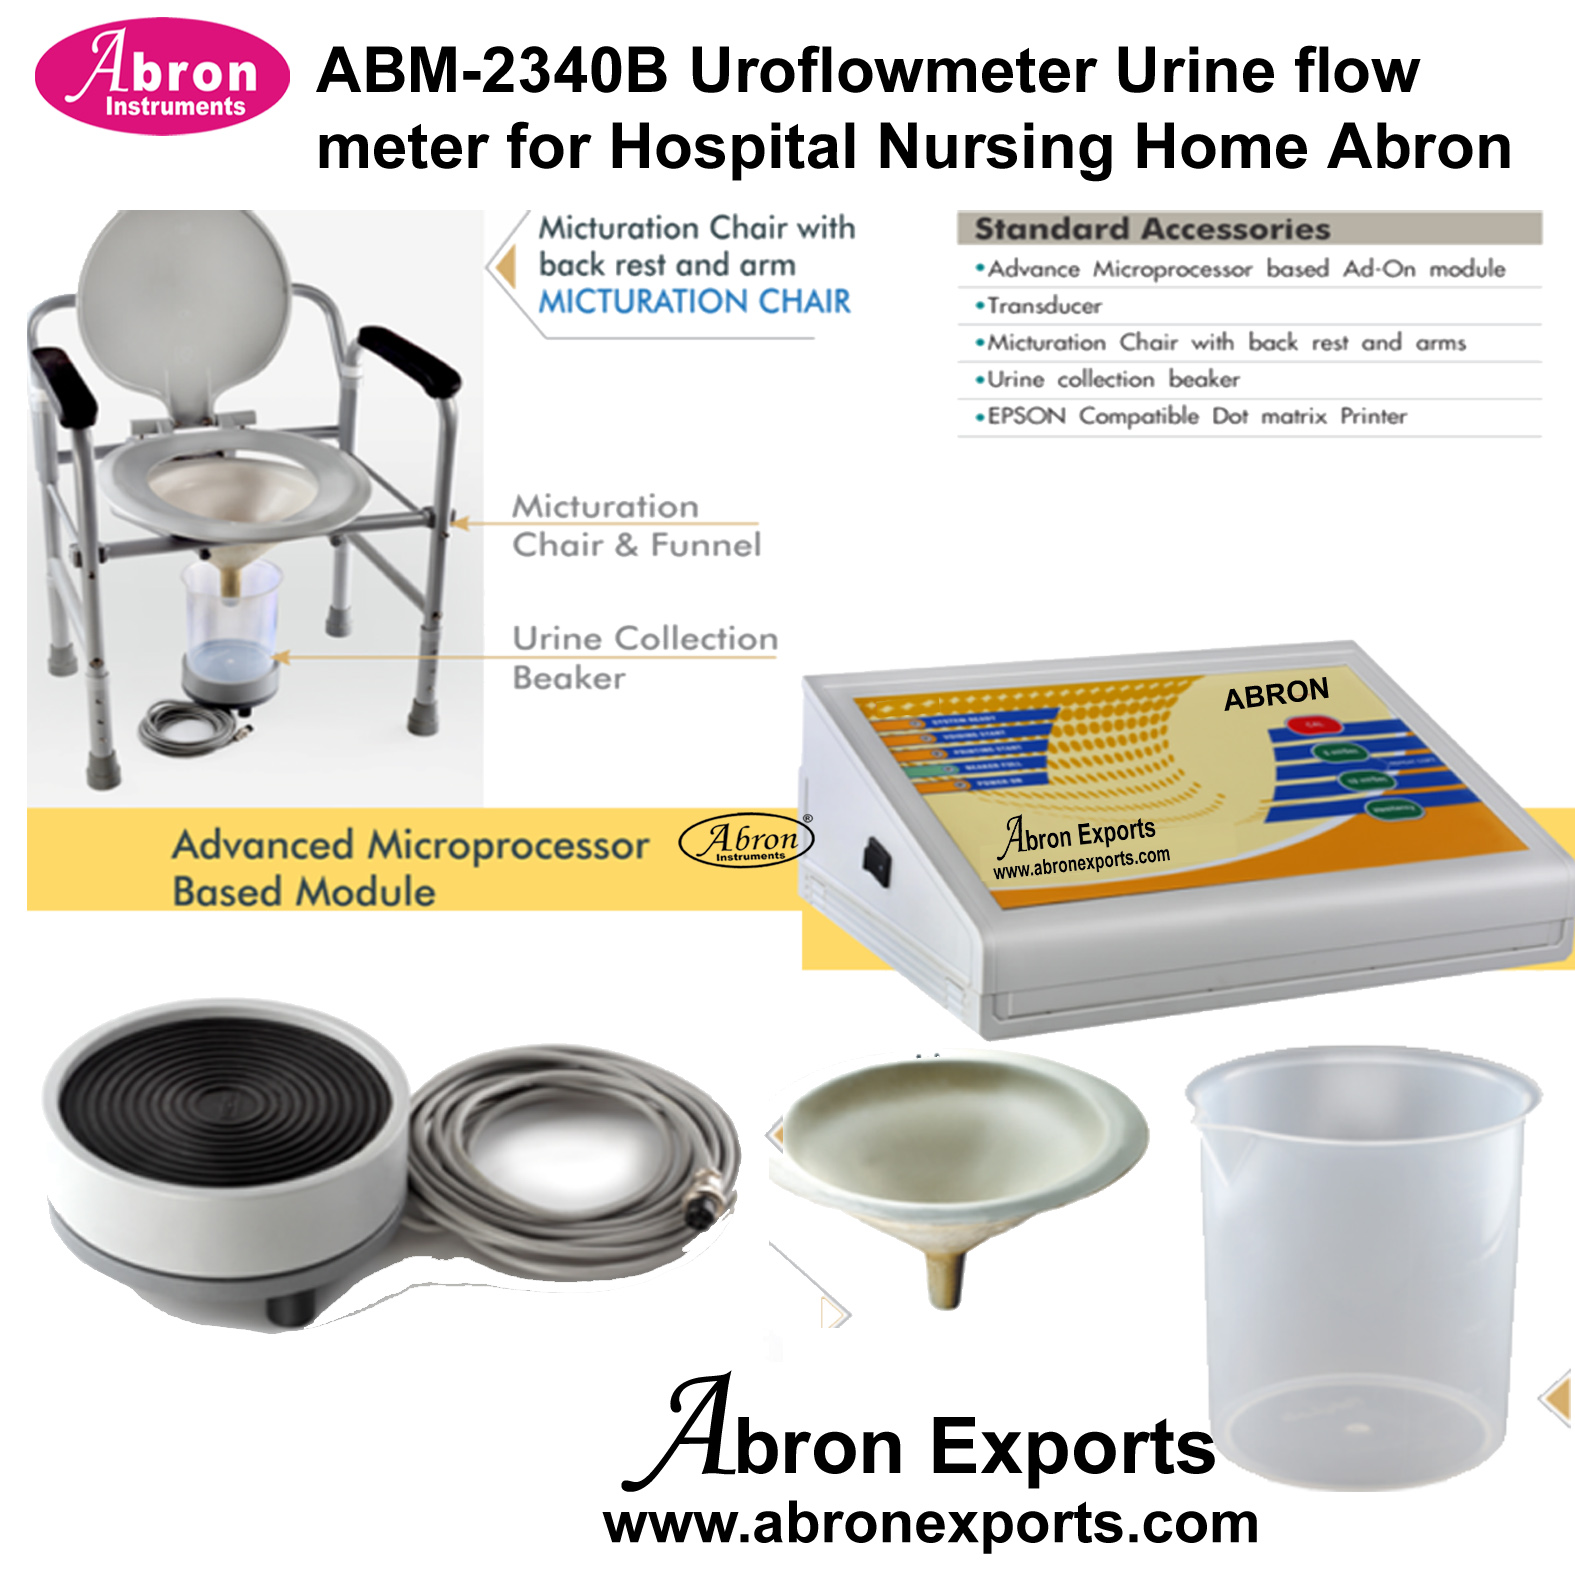 Uroflowmeter Urine flow meter for Hospital Nursing Home Medical Abron ABM-2340B 